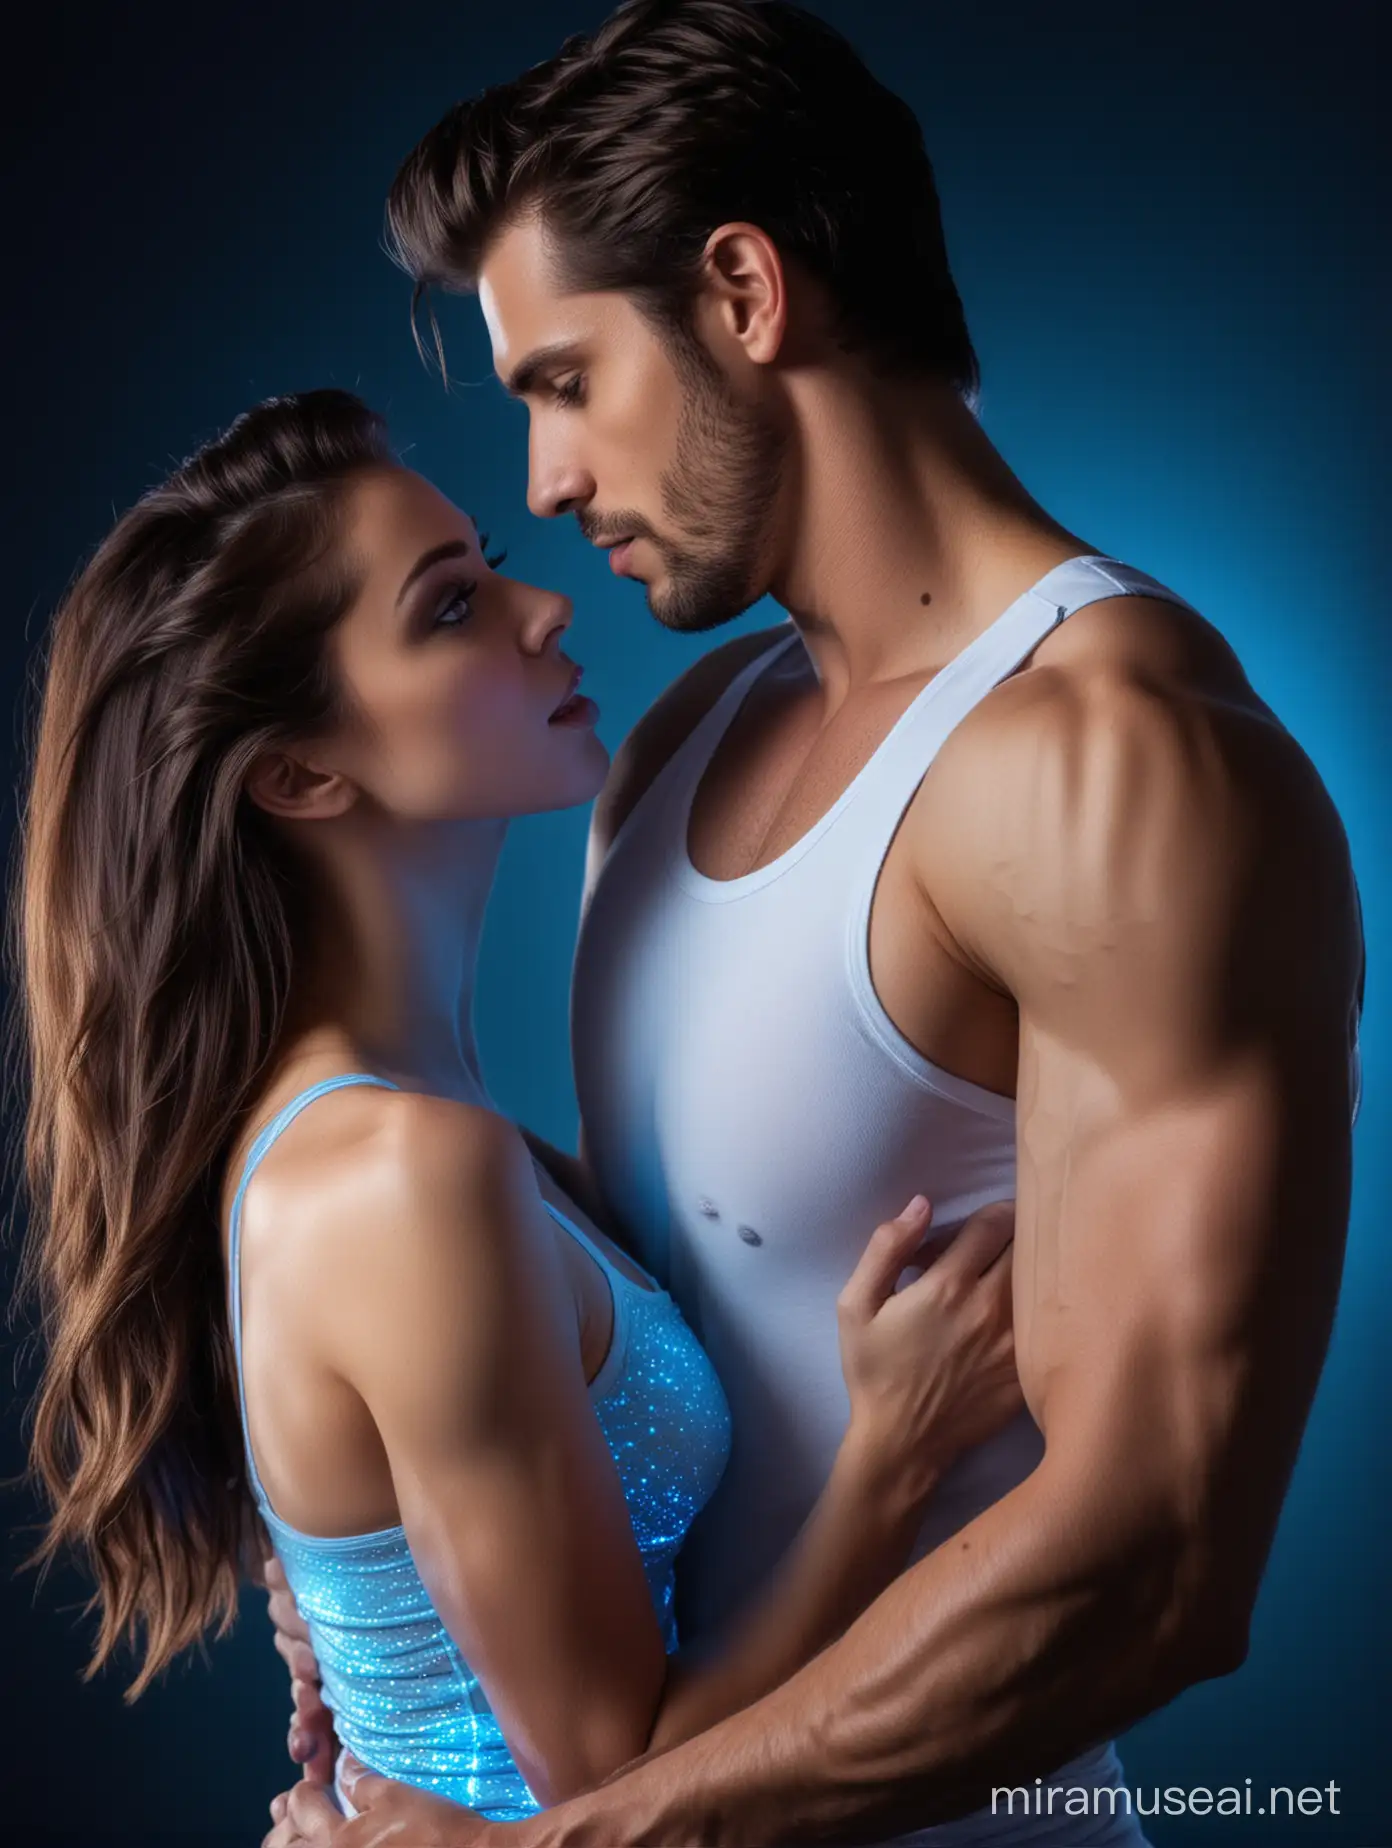 Romantic Couple Embraced in Blue Luminous Glow